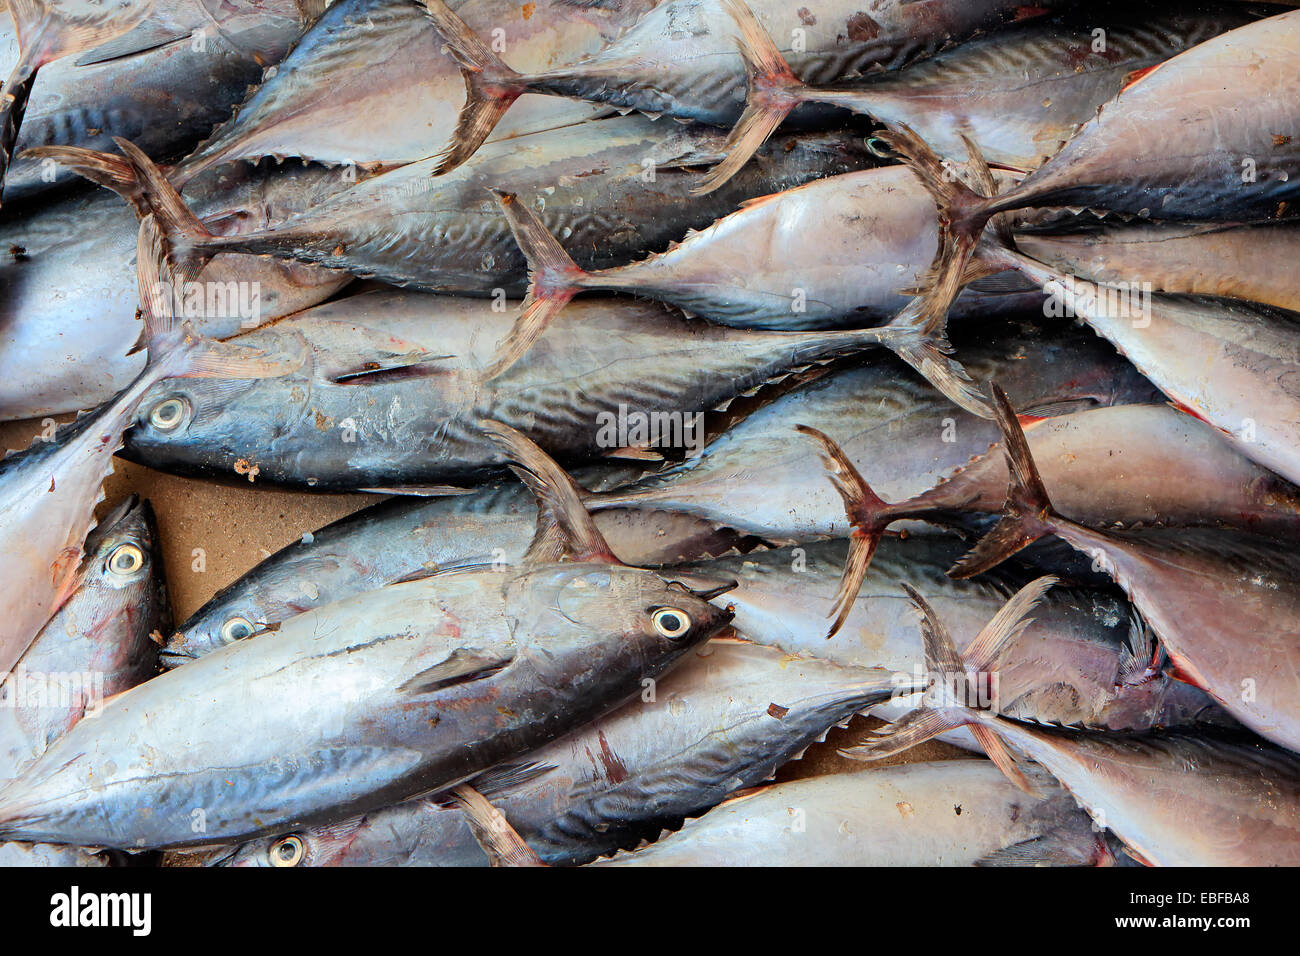 A catch of fishes on a fish market, Zanzibar island Stock Photo